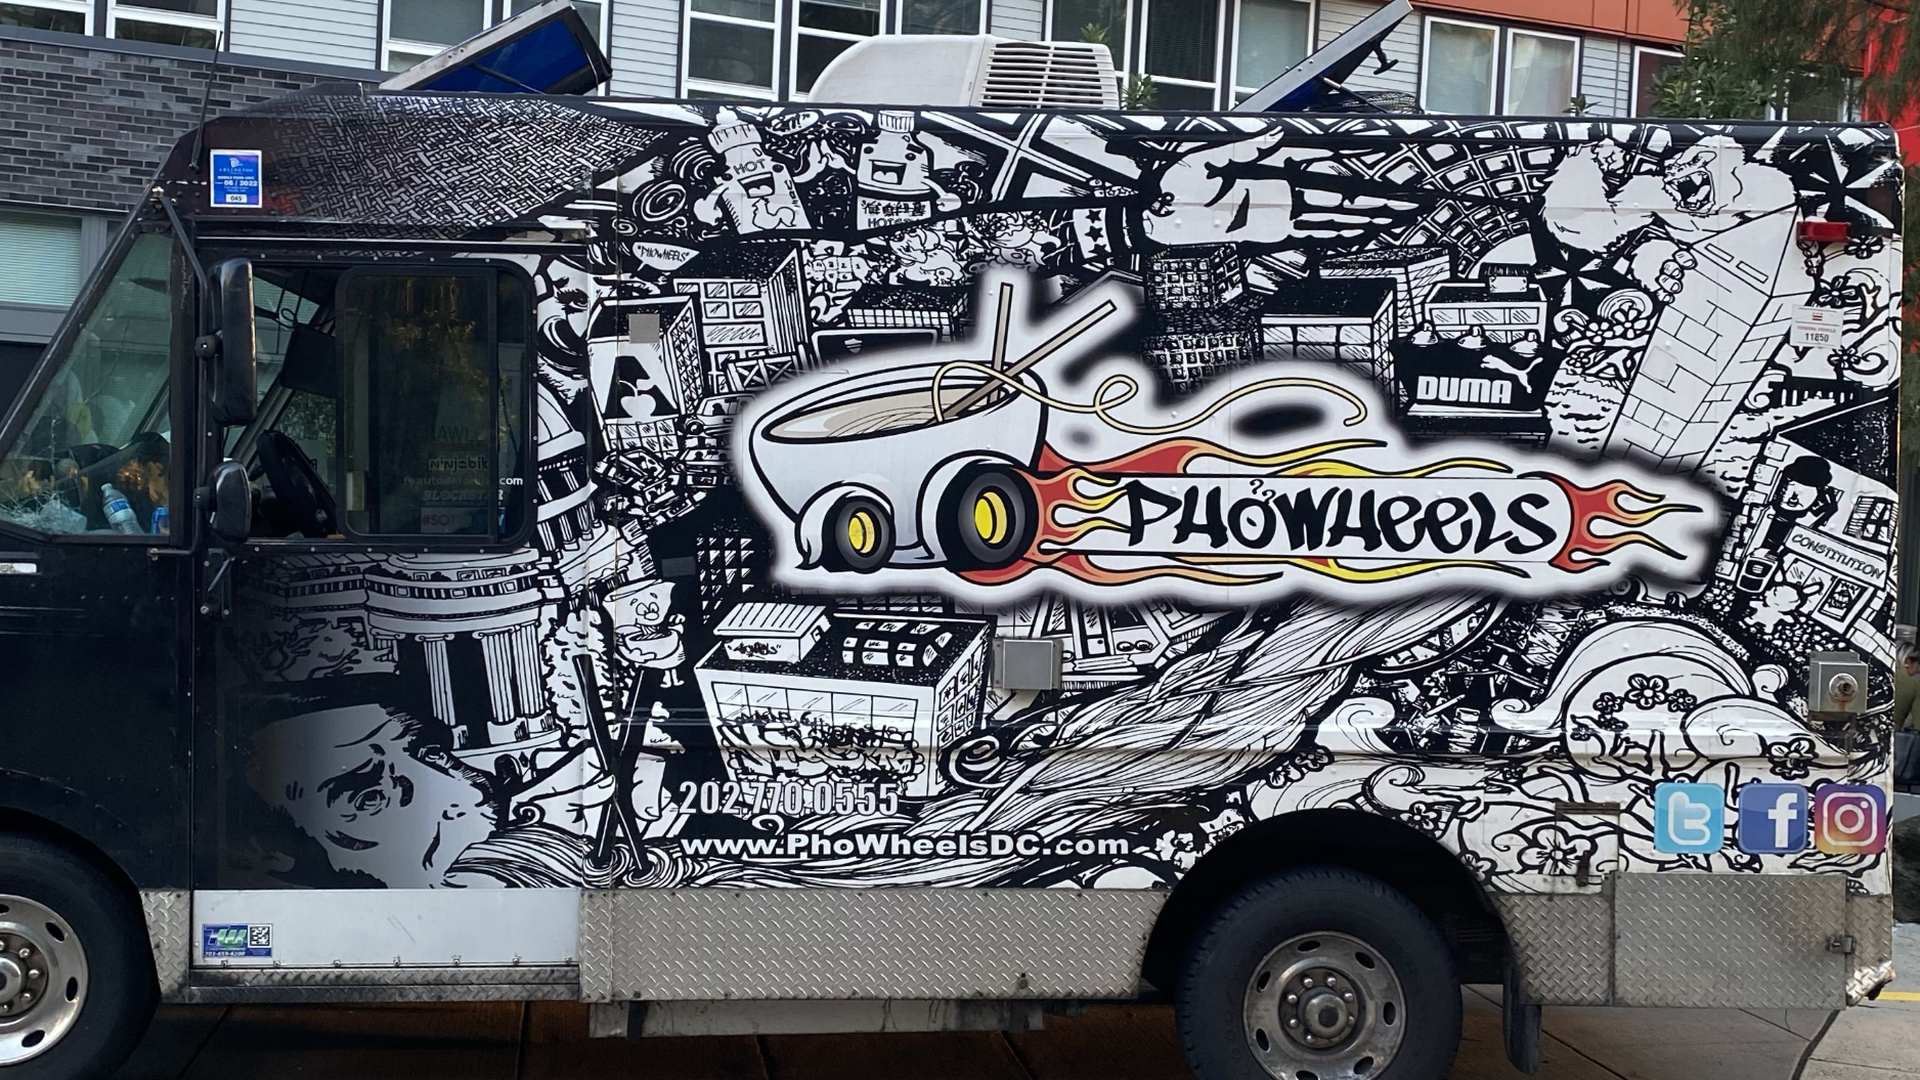 PhoWheels food truck.